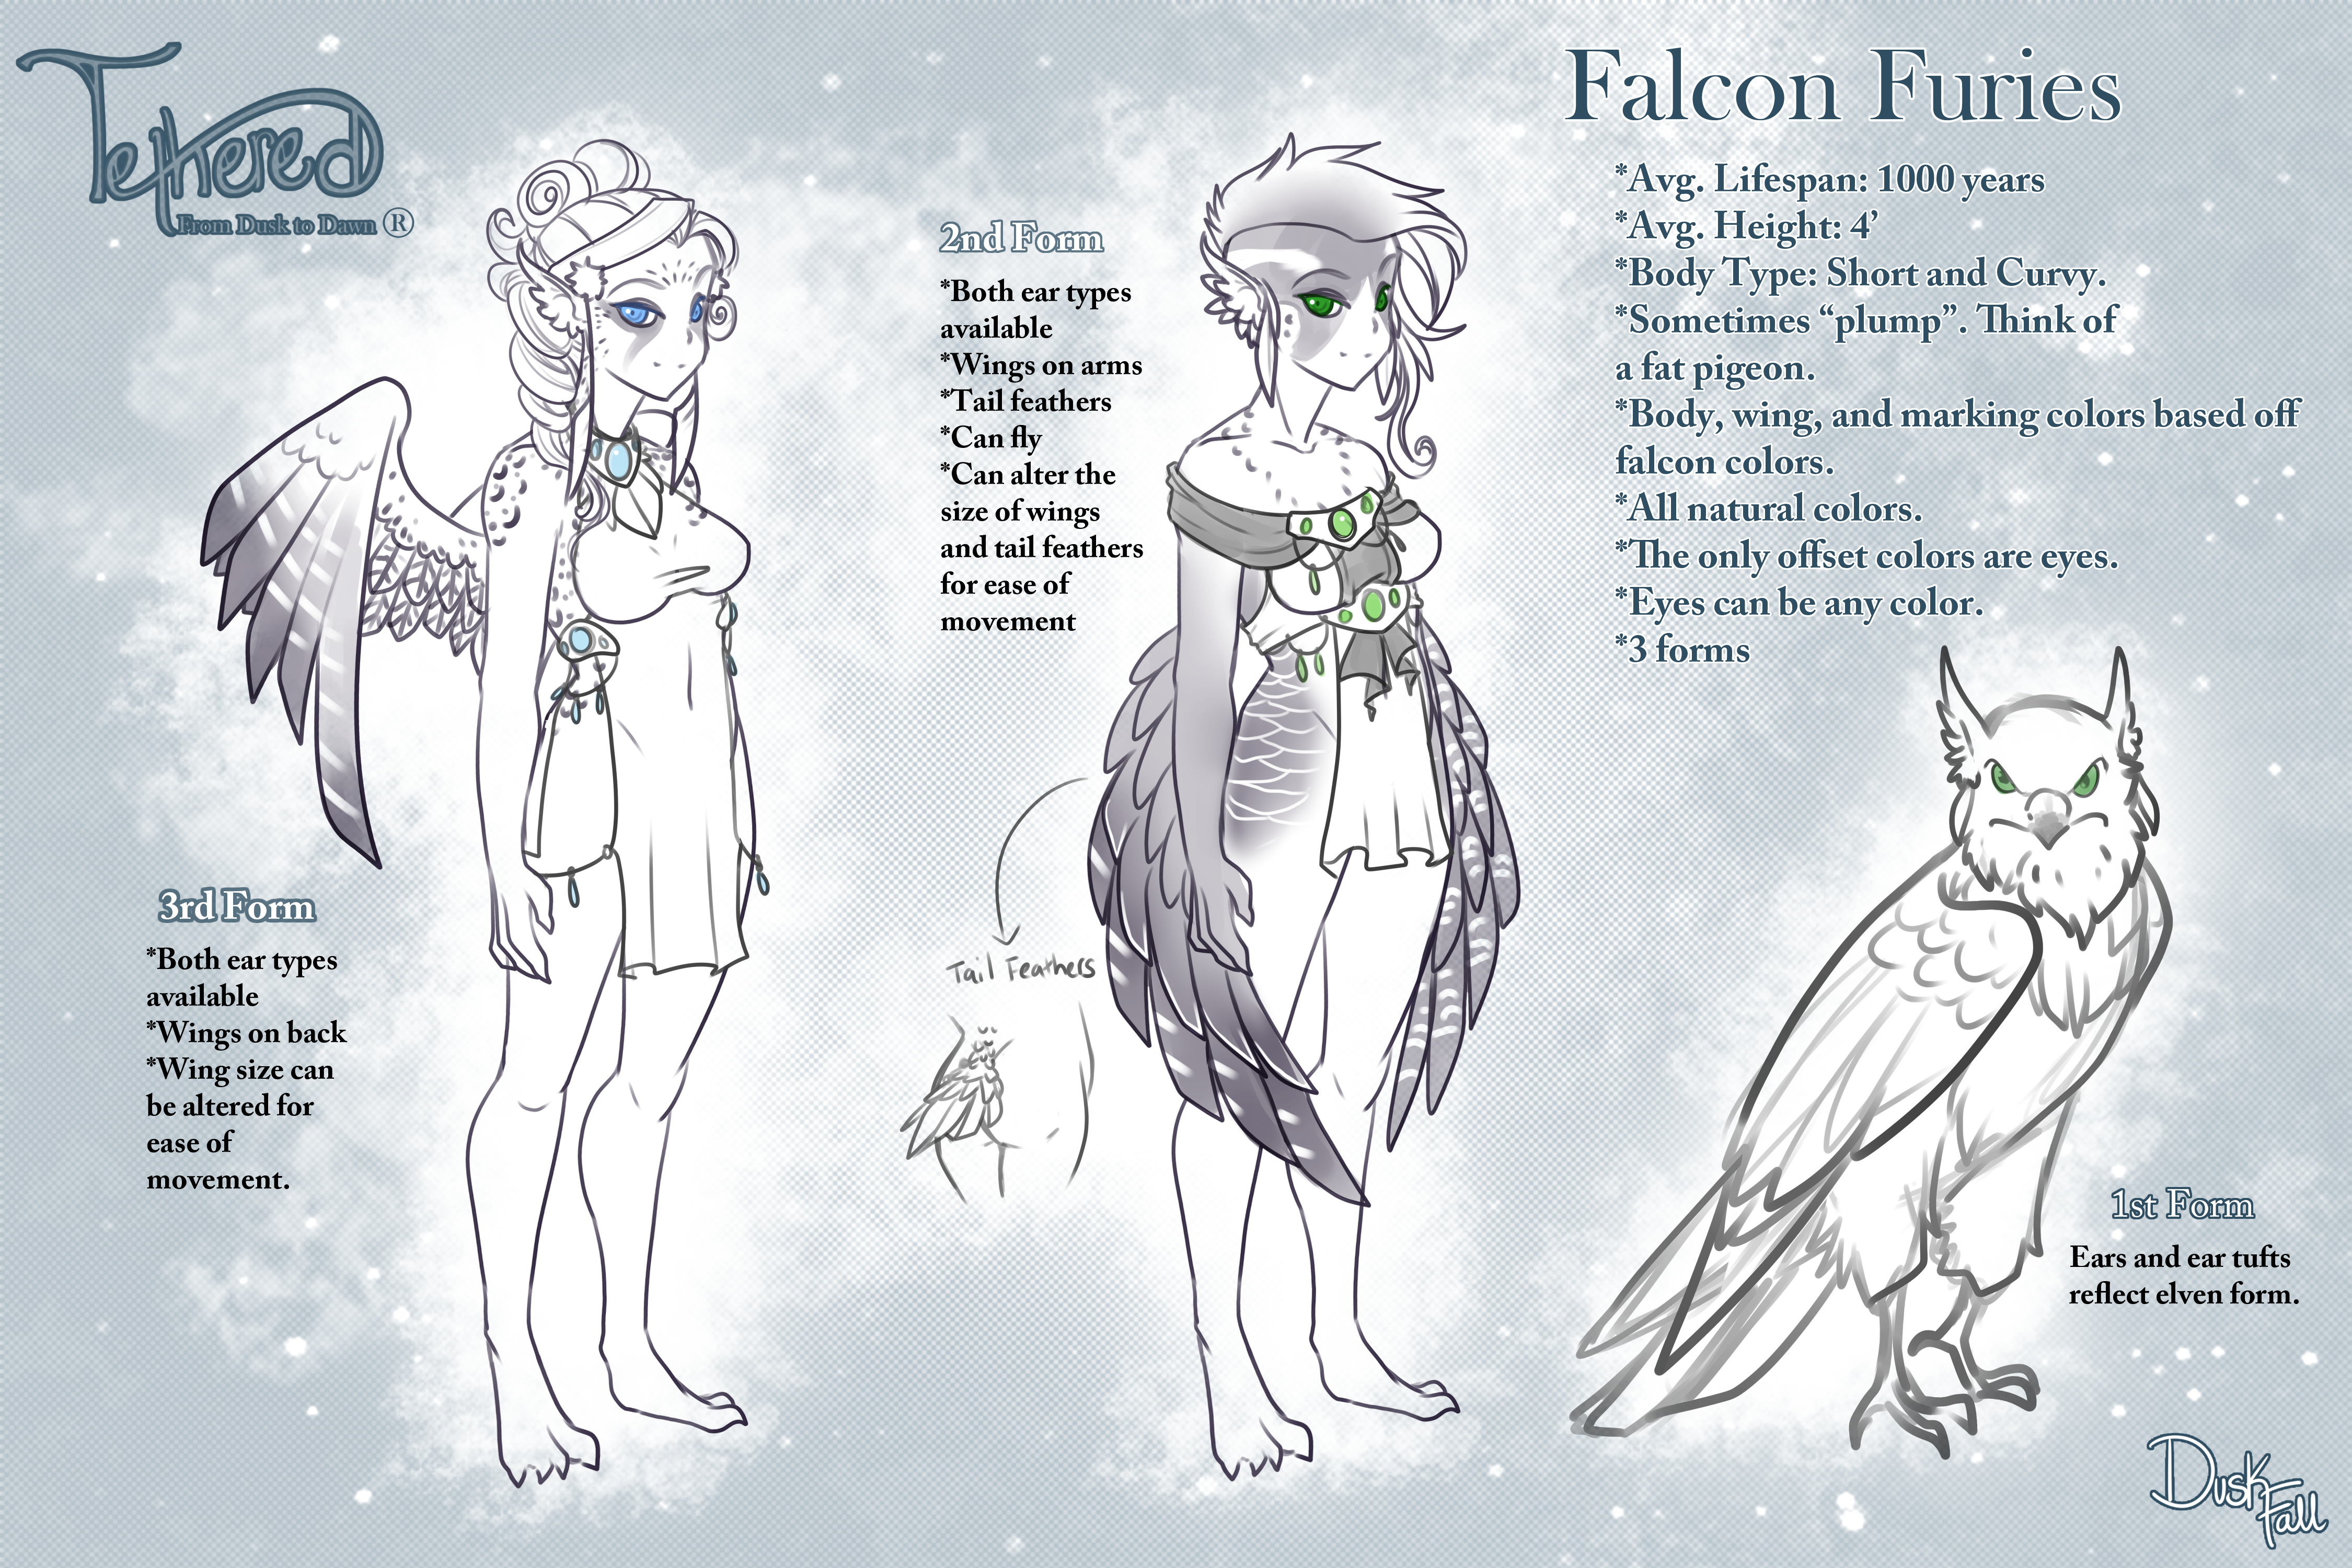 How to Create a Falcon Fury